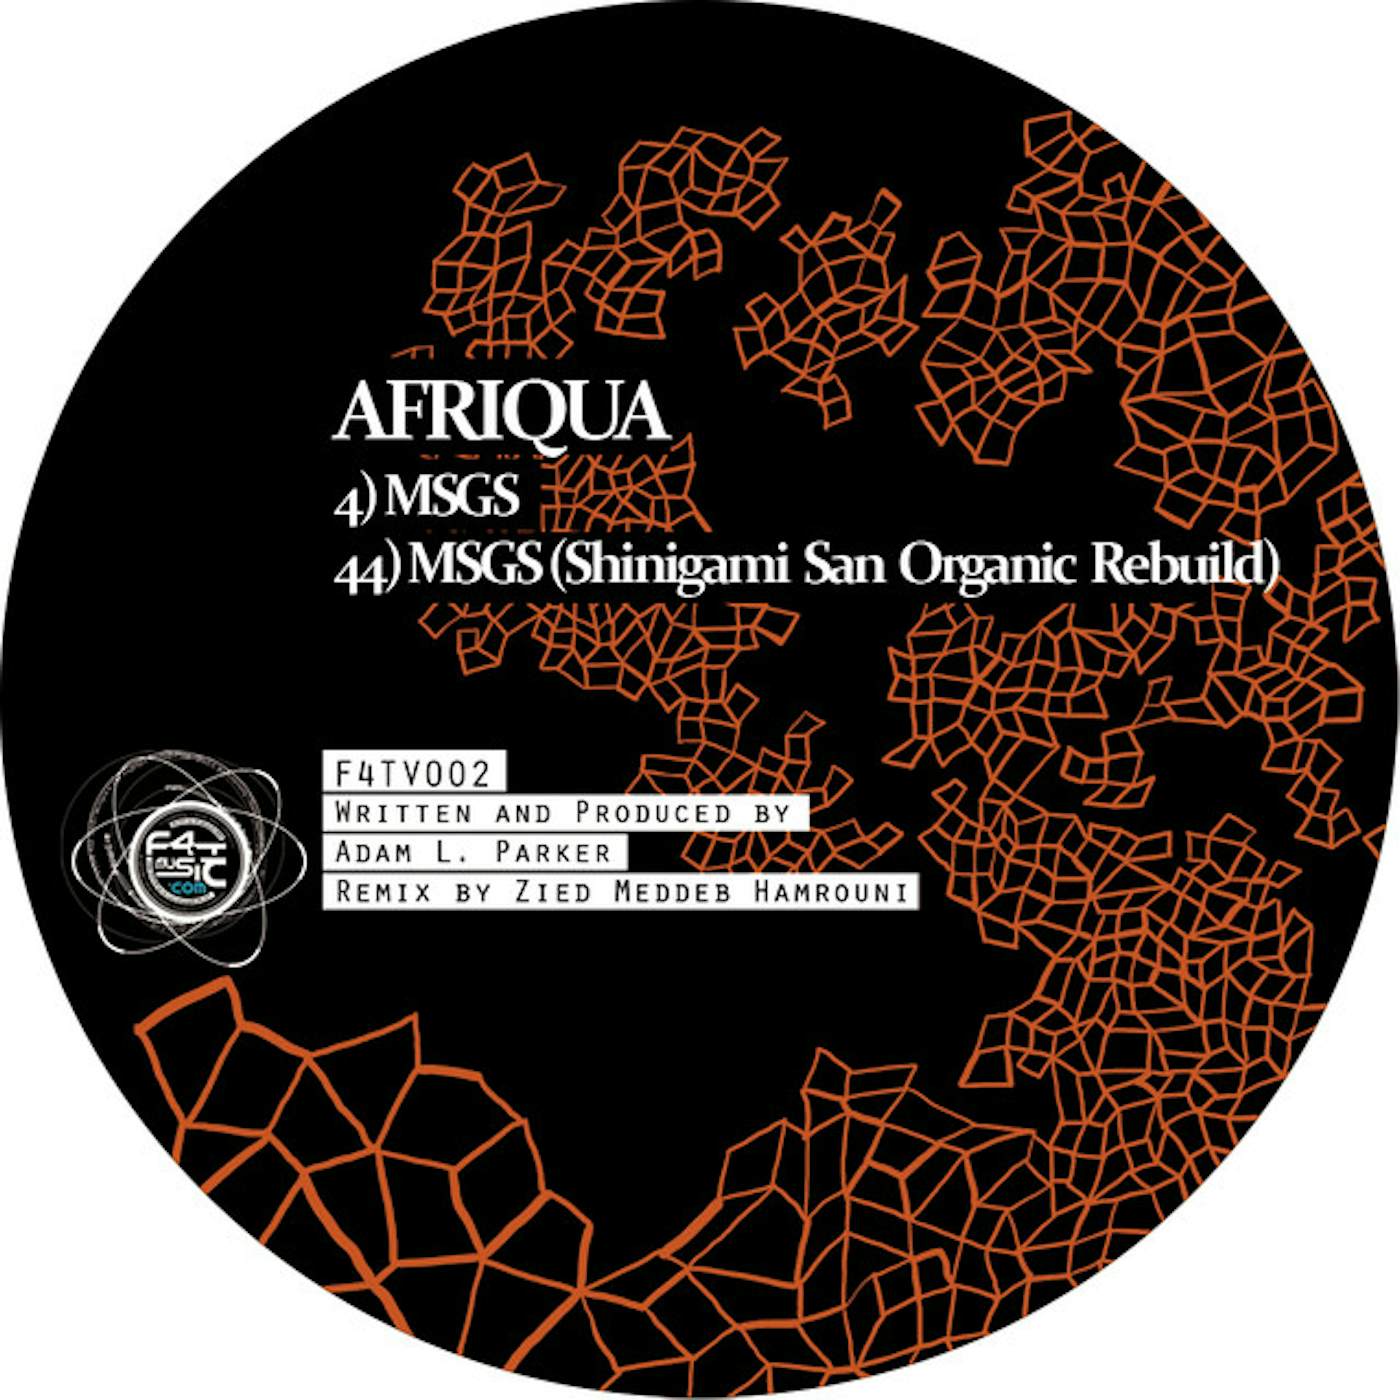 Afriqua MSGS Vinyl Record